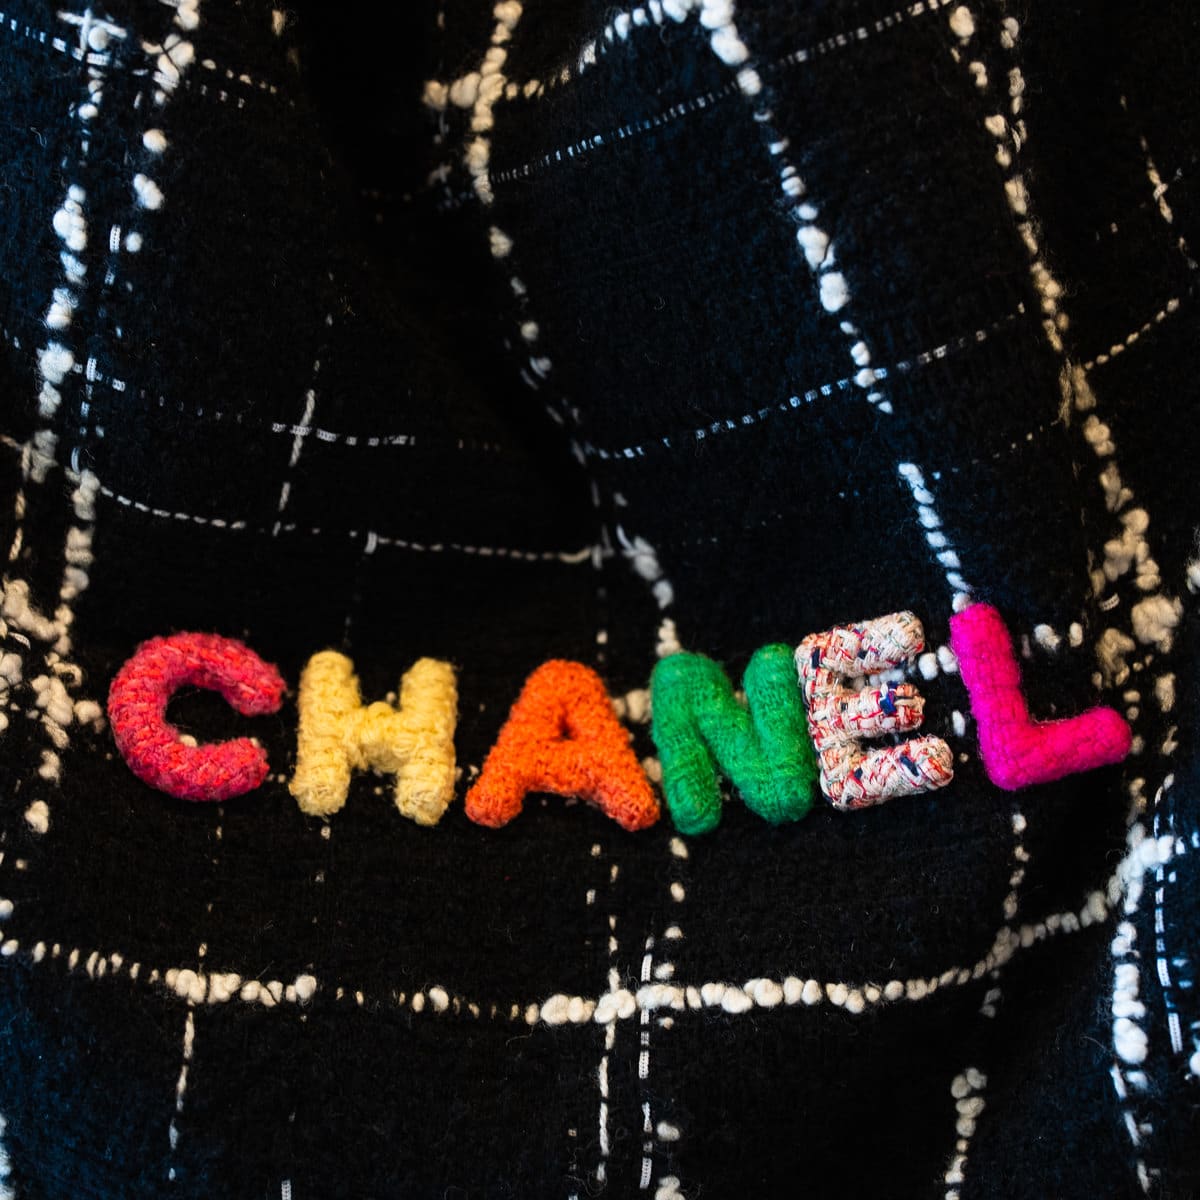 Chanel 22 Tweed Bag 4 of 5